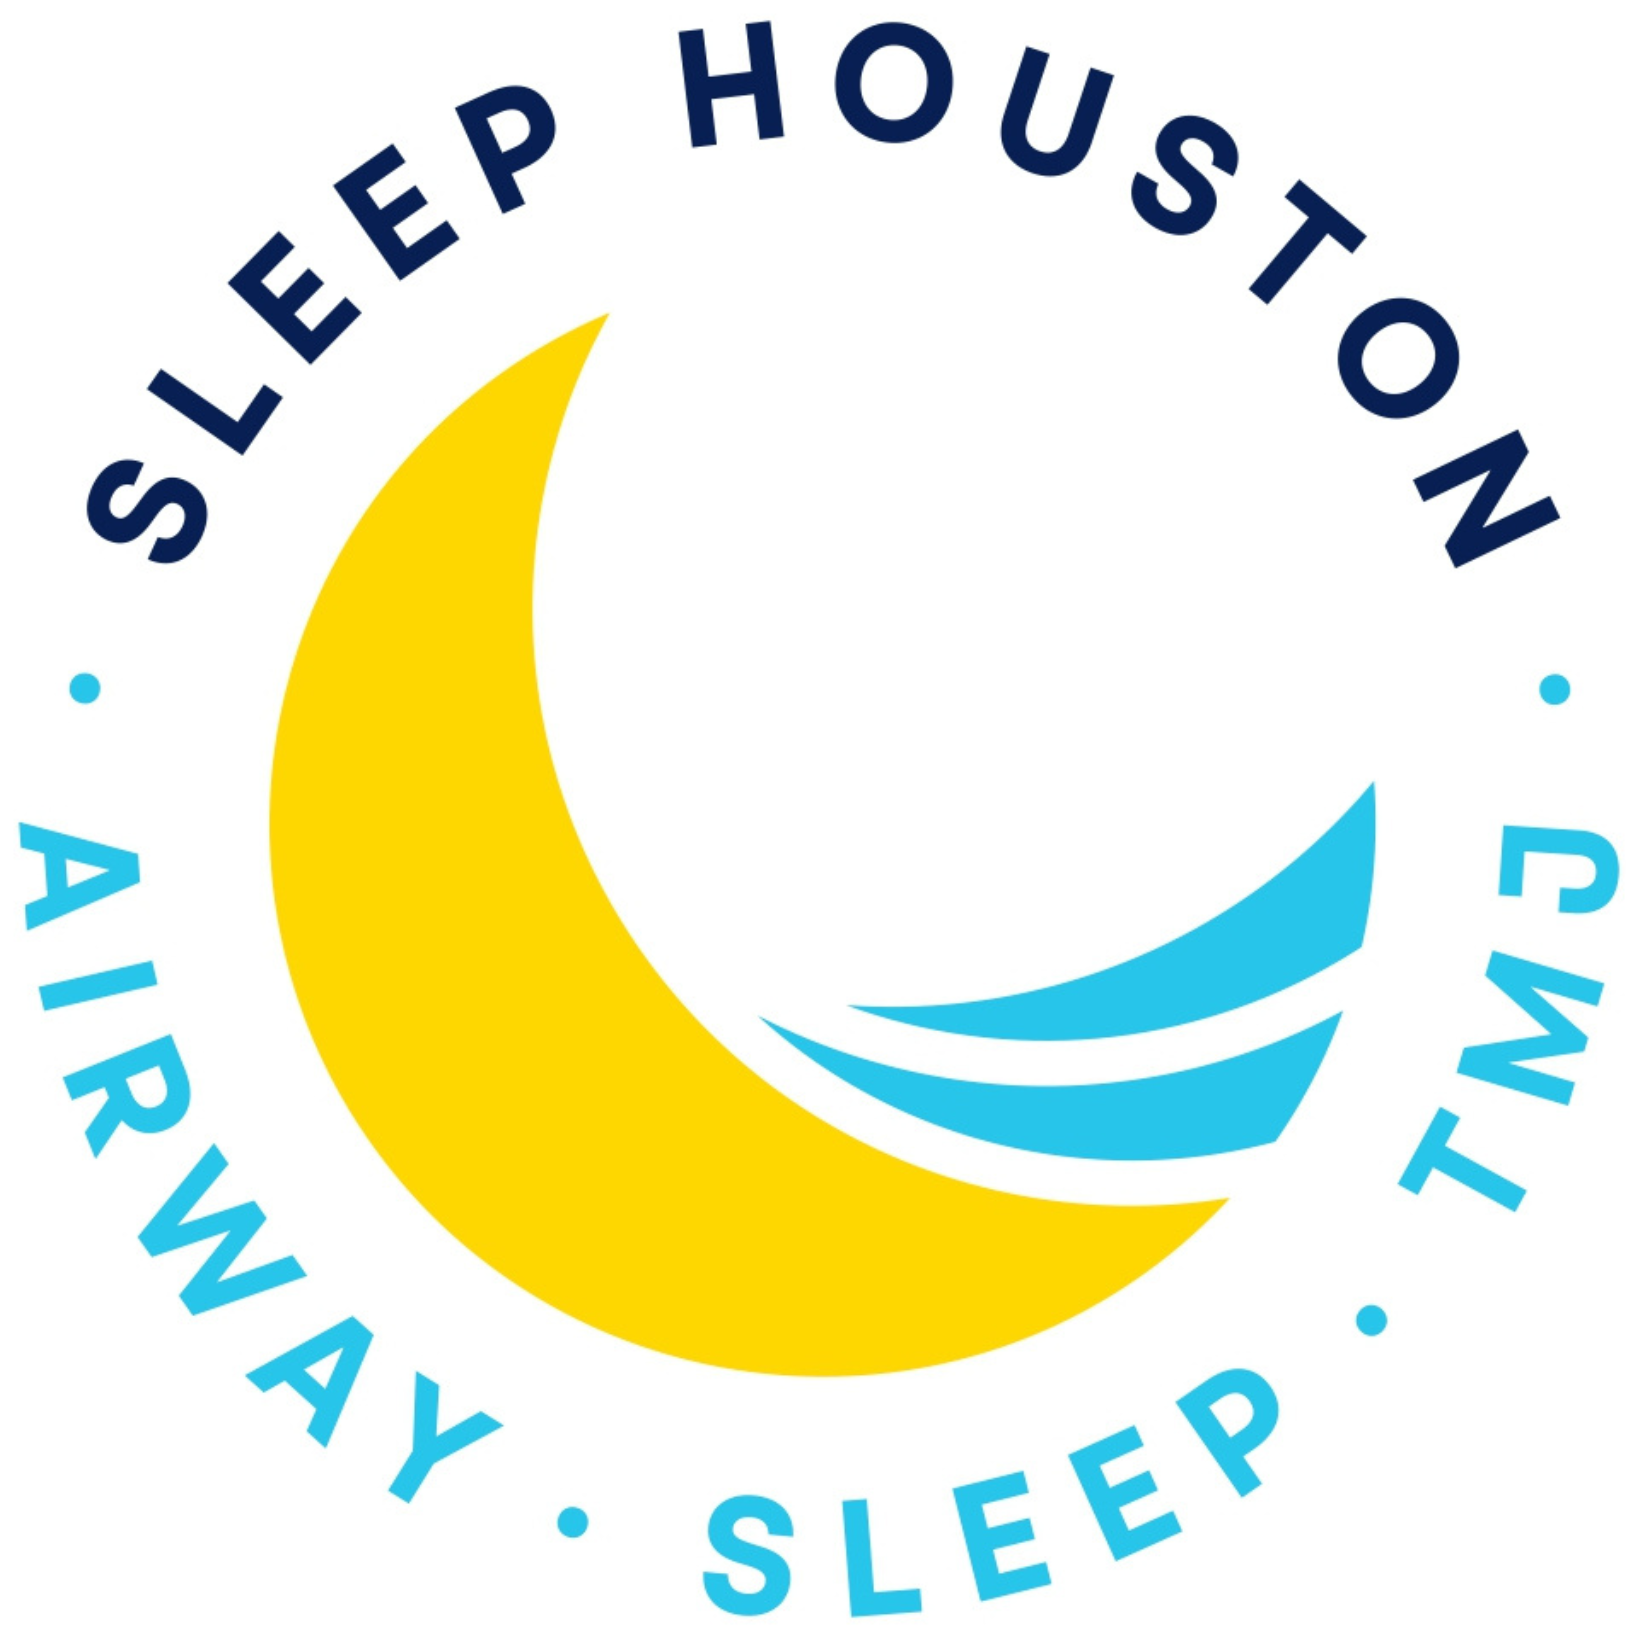 Sleep Houston